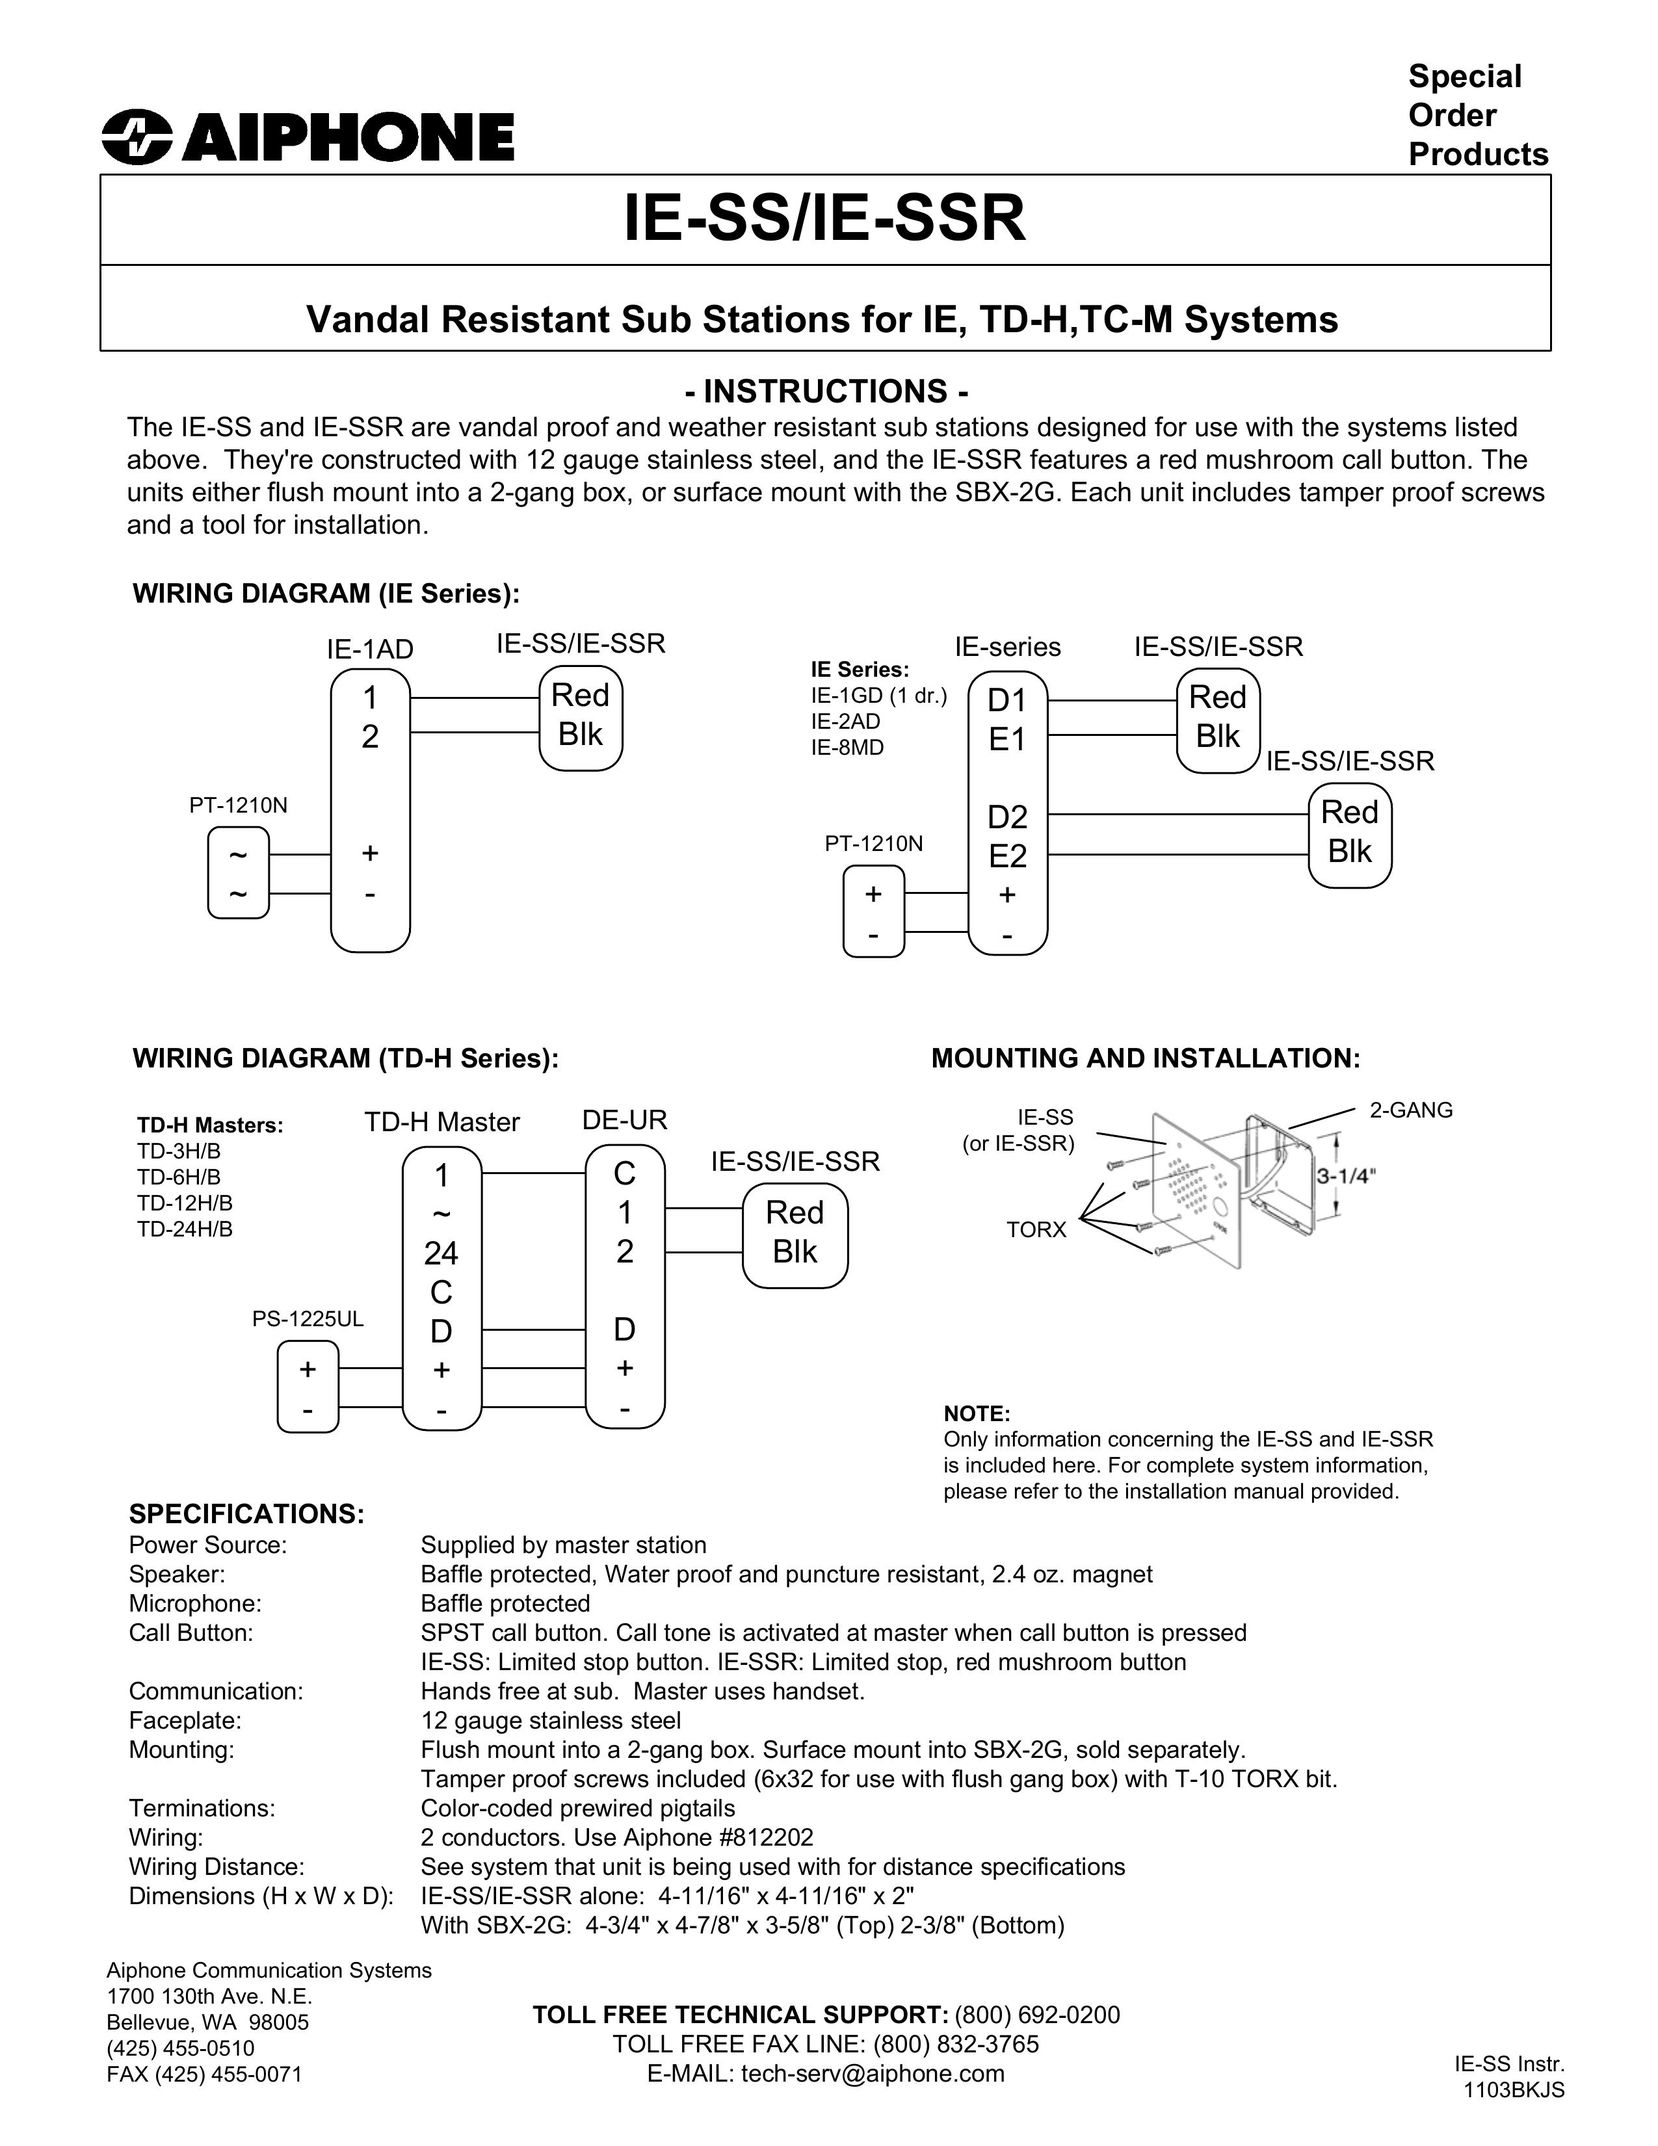 Aiphone IE-SSR Telephone User Manual